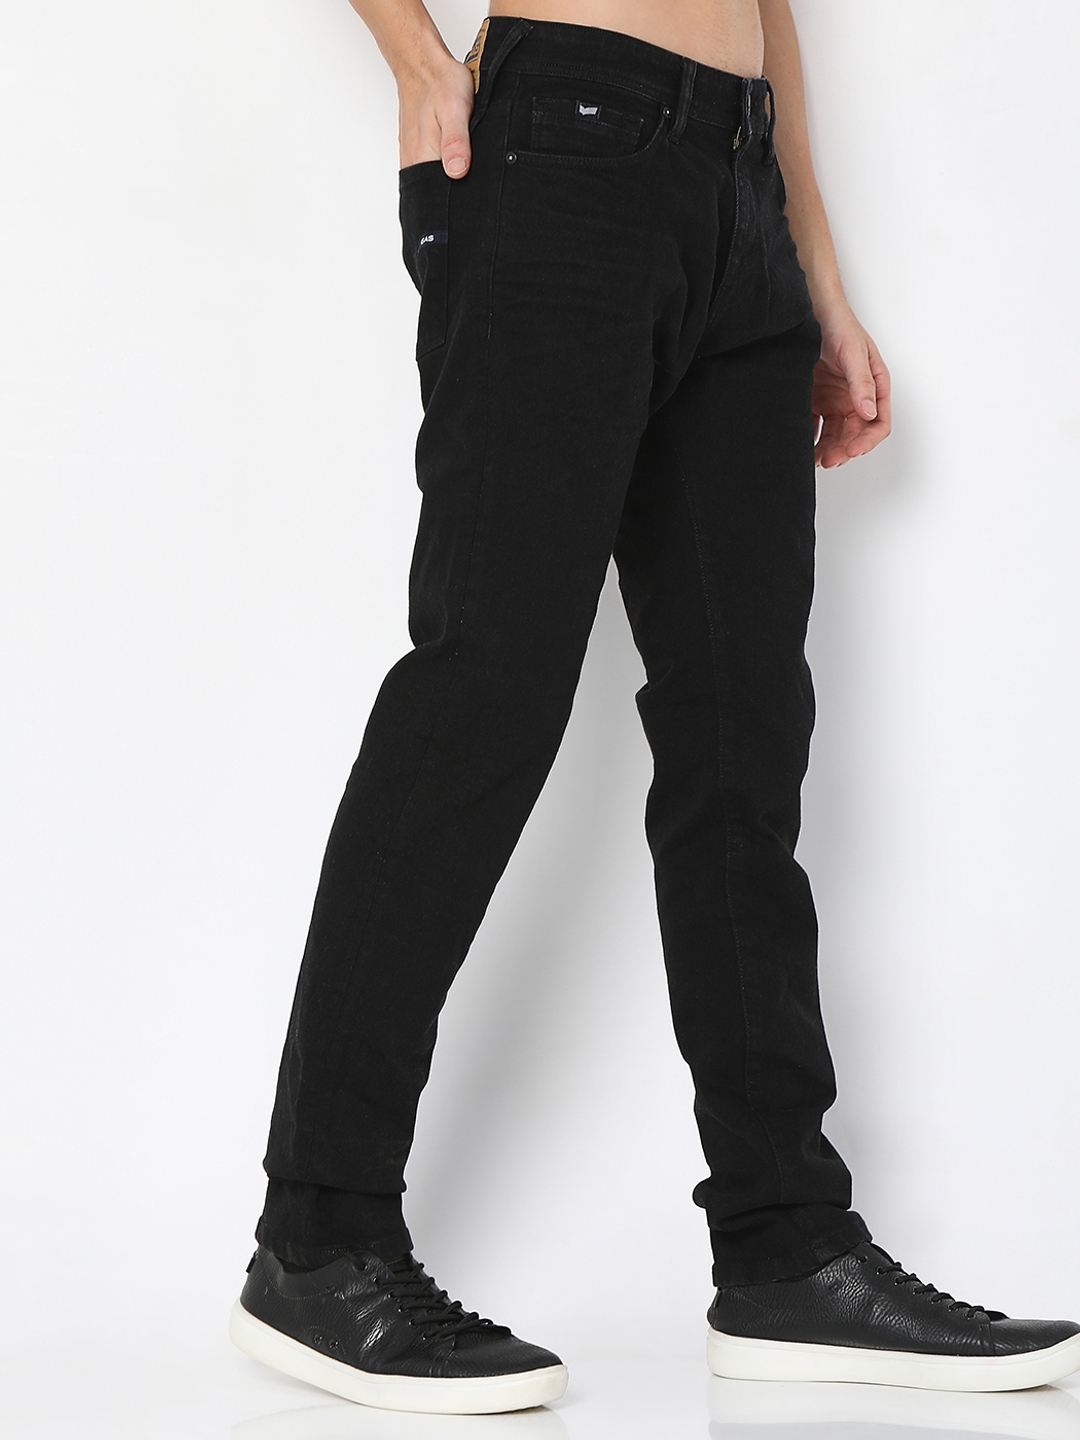 Jeans & Pants | GAS Black Denim Jeans For Men,Waist 32inches | Freeup